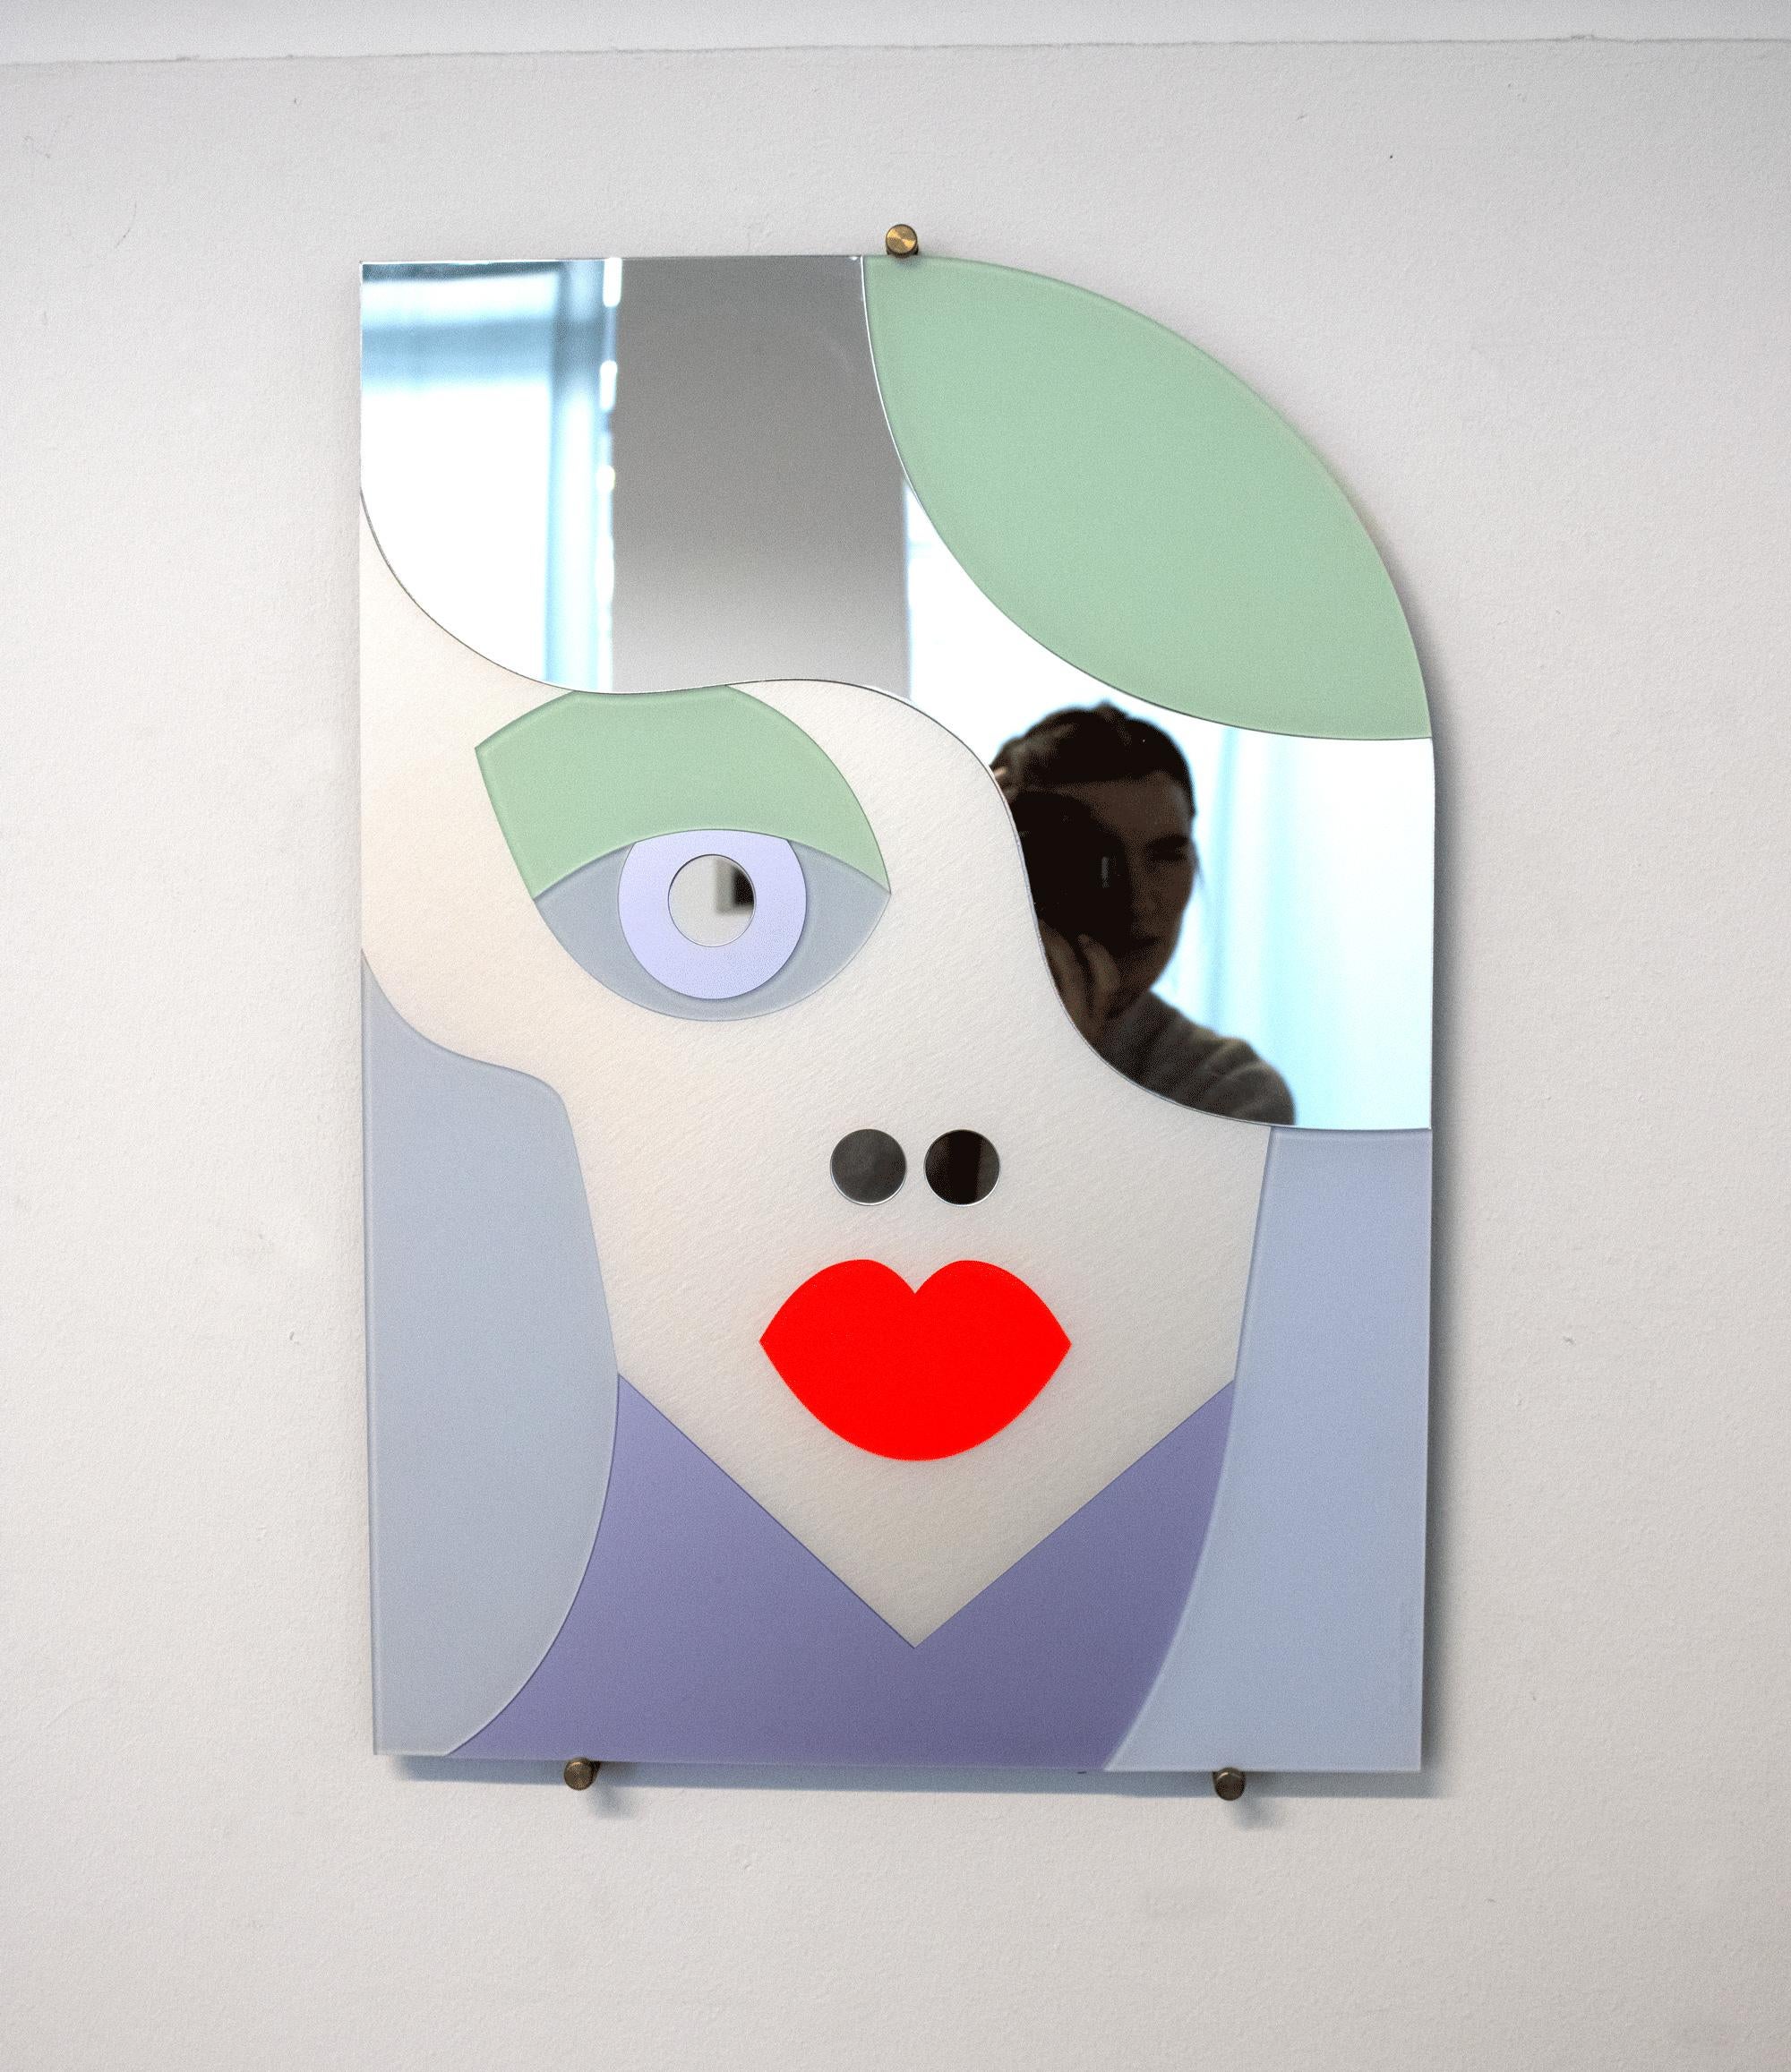 European  Ice Queen, portrait, pastel colored mirror artwork made of plexiglass For Sale